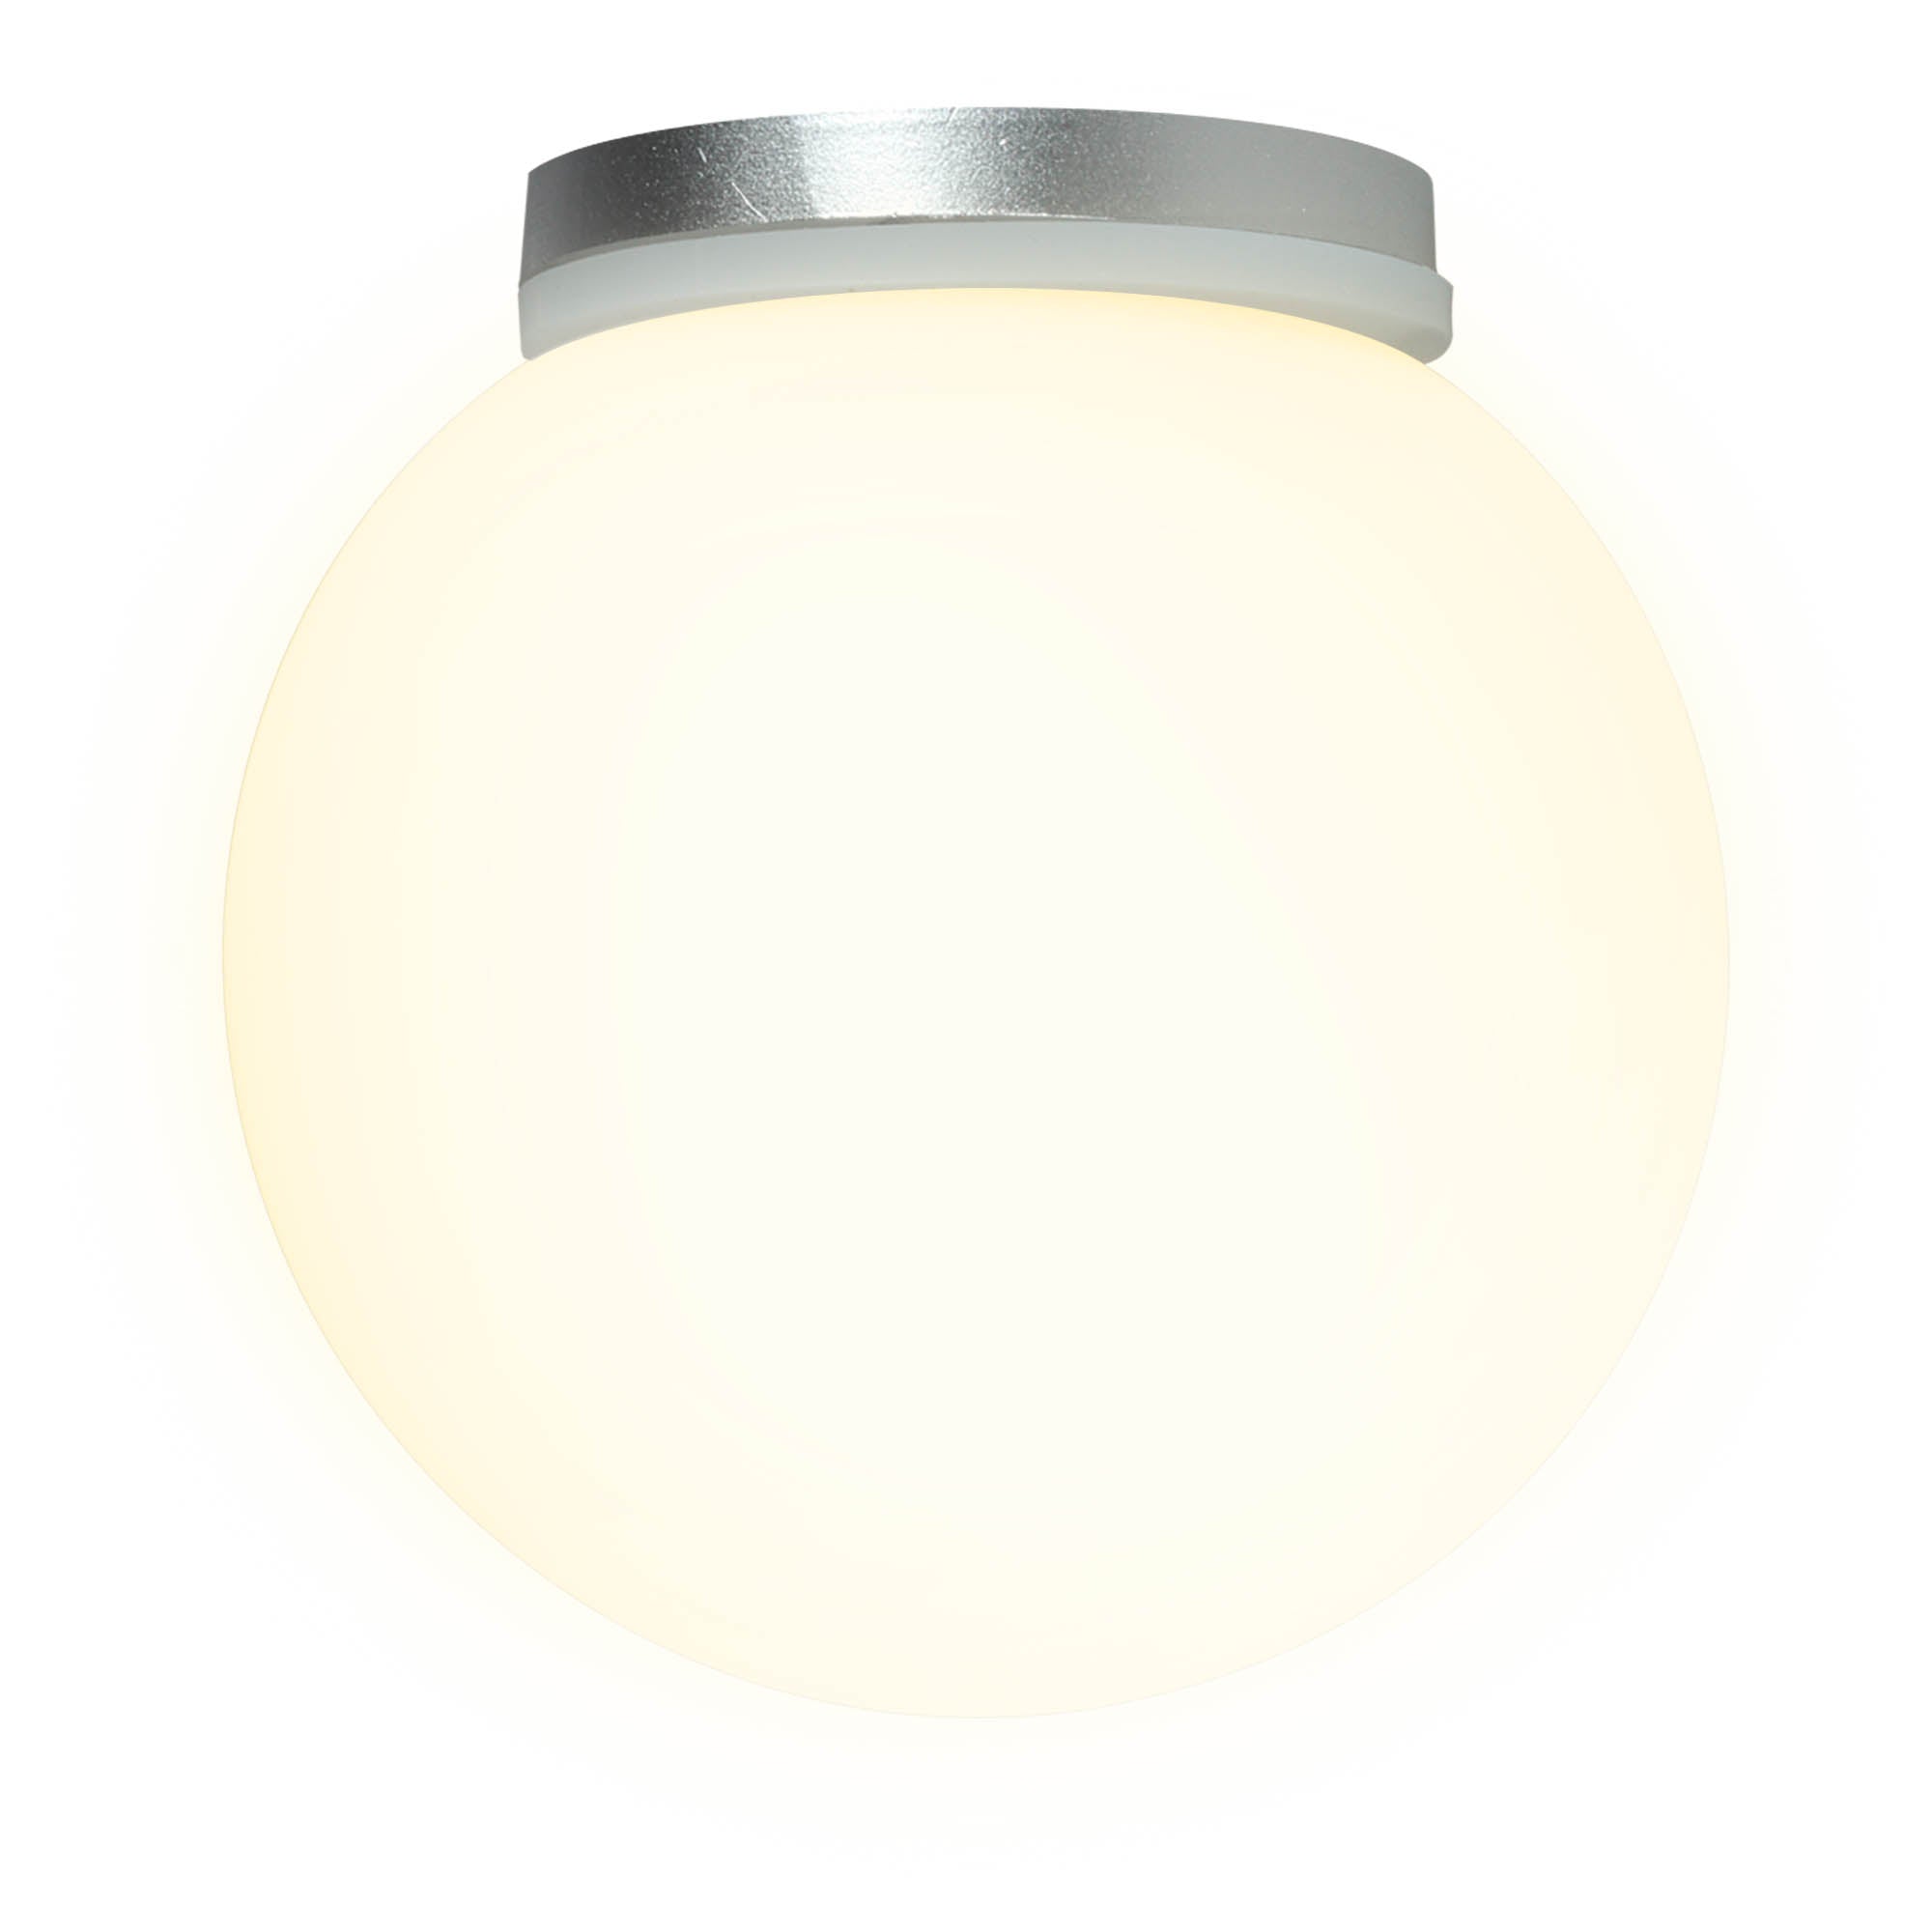 Luminaria LED Decorativa Esférica para Muro o Techo, Modelo DL-5903.B30 Illux